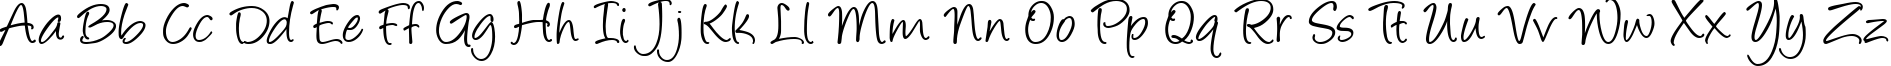 Пример написания английского алфавита шрифтом Angelina